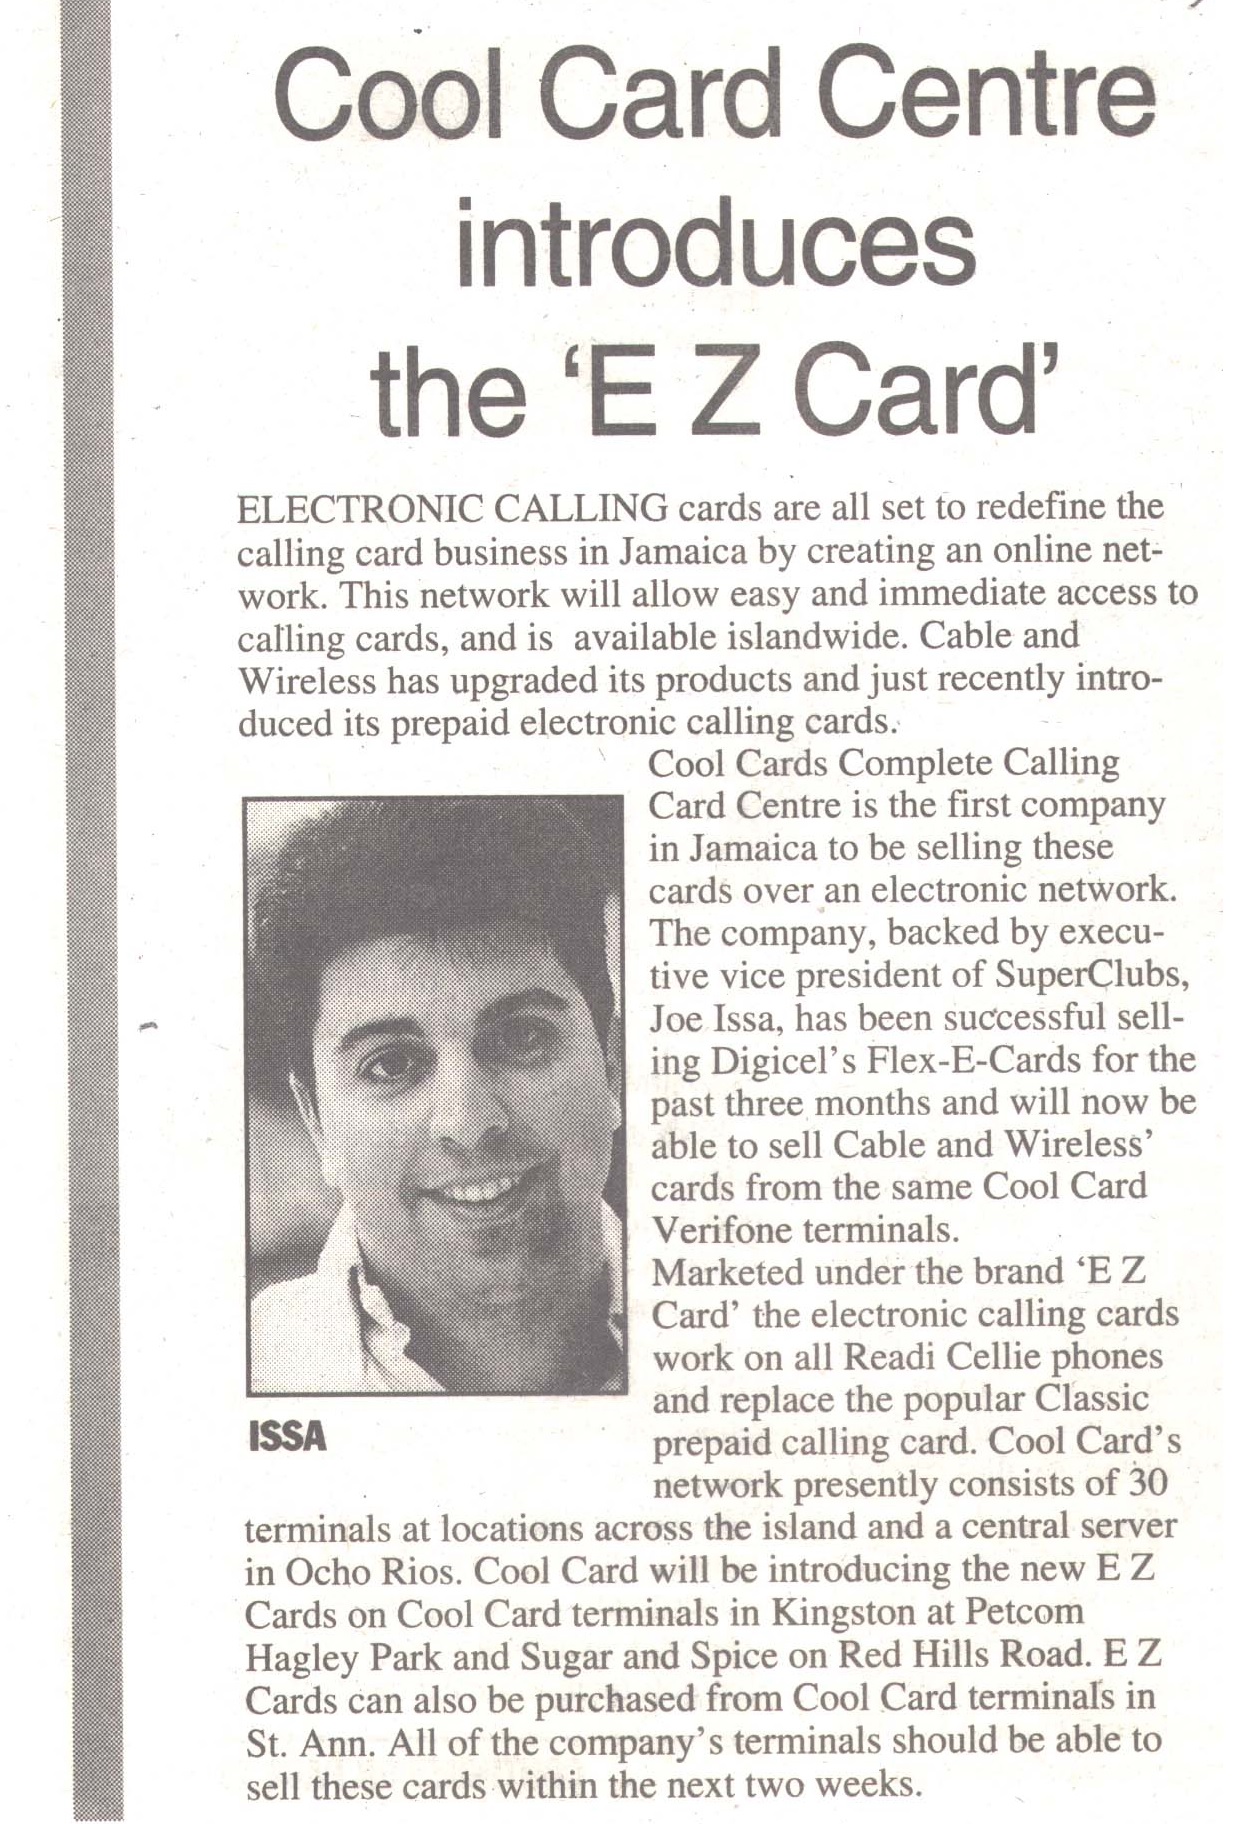 Cool Card Centre introduces EZ Card